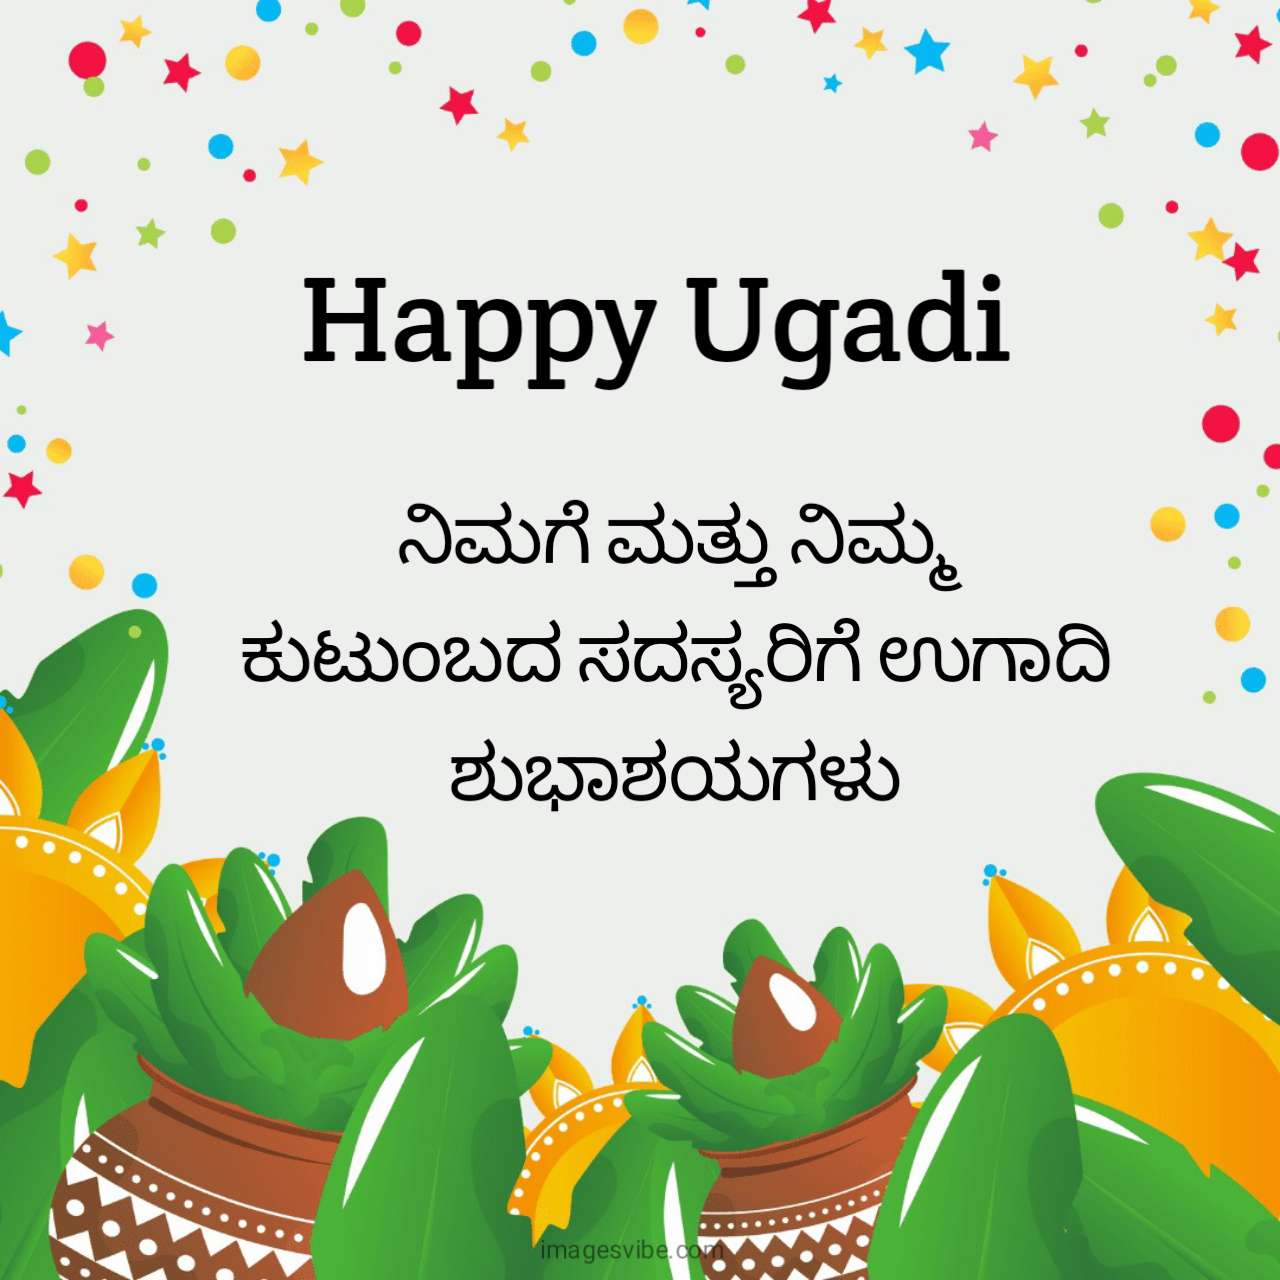 Happy Ugadi Images In Kannada